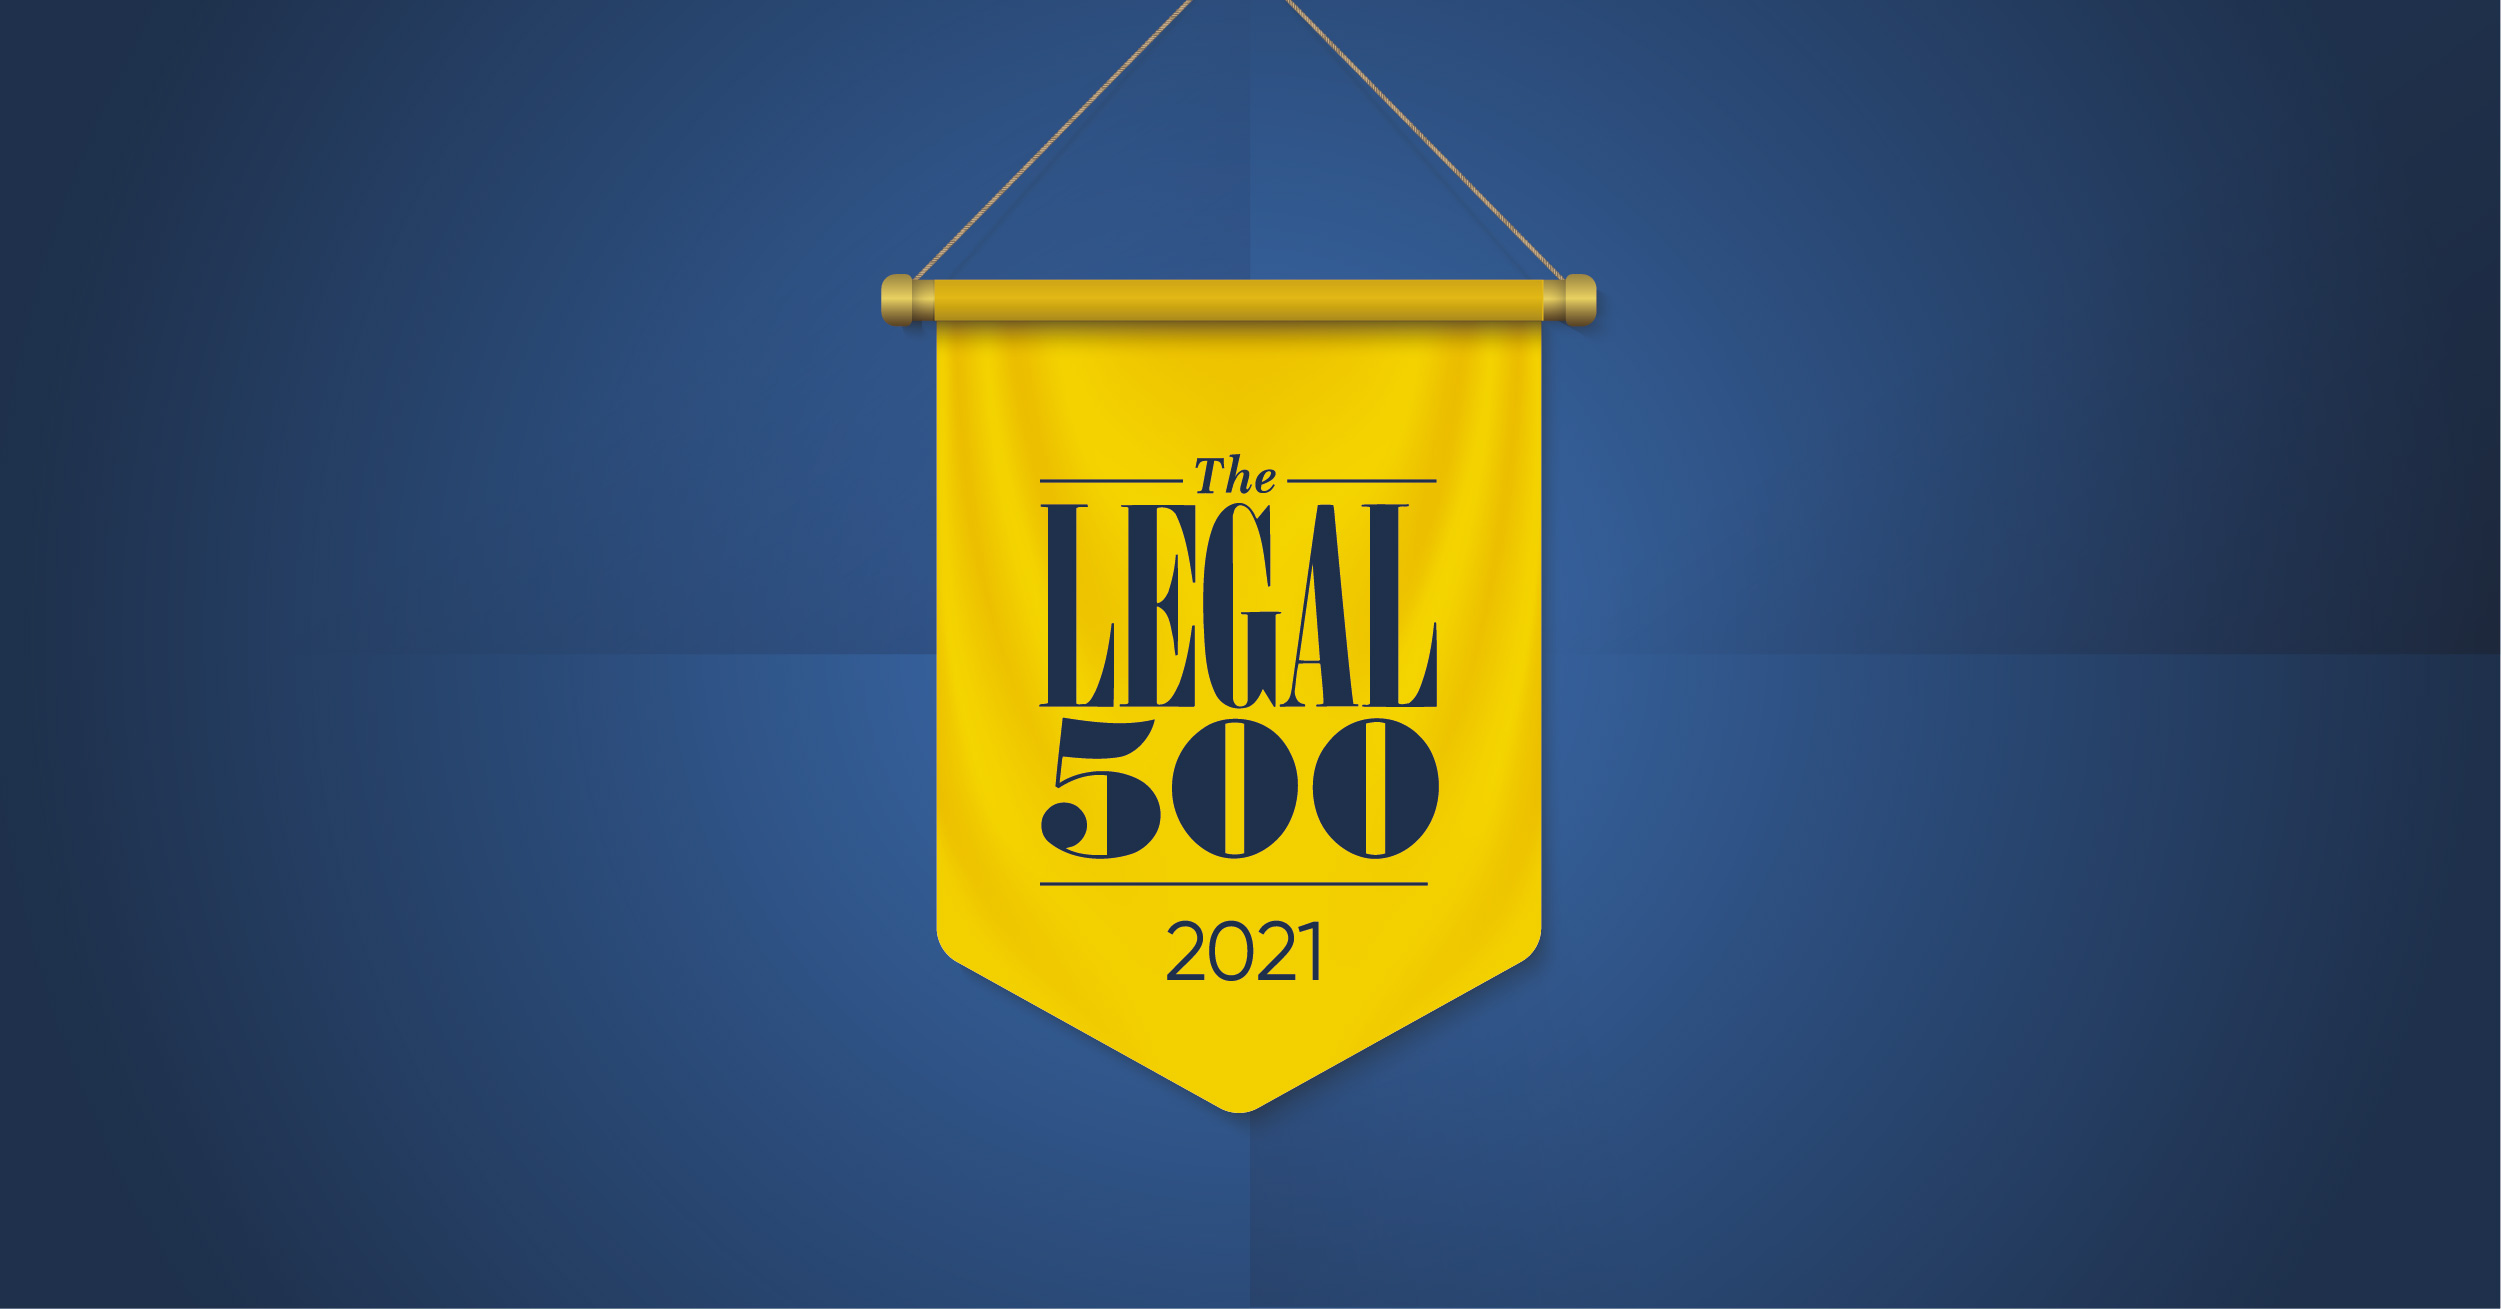 Legal 500 2021 banner